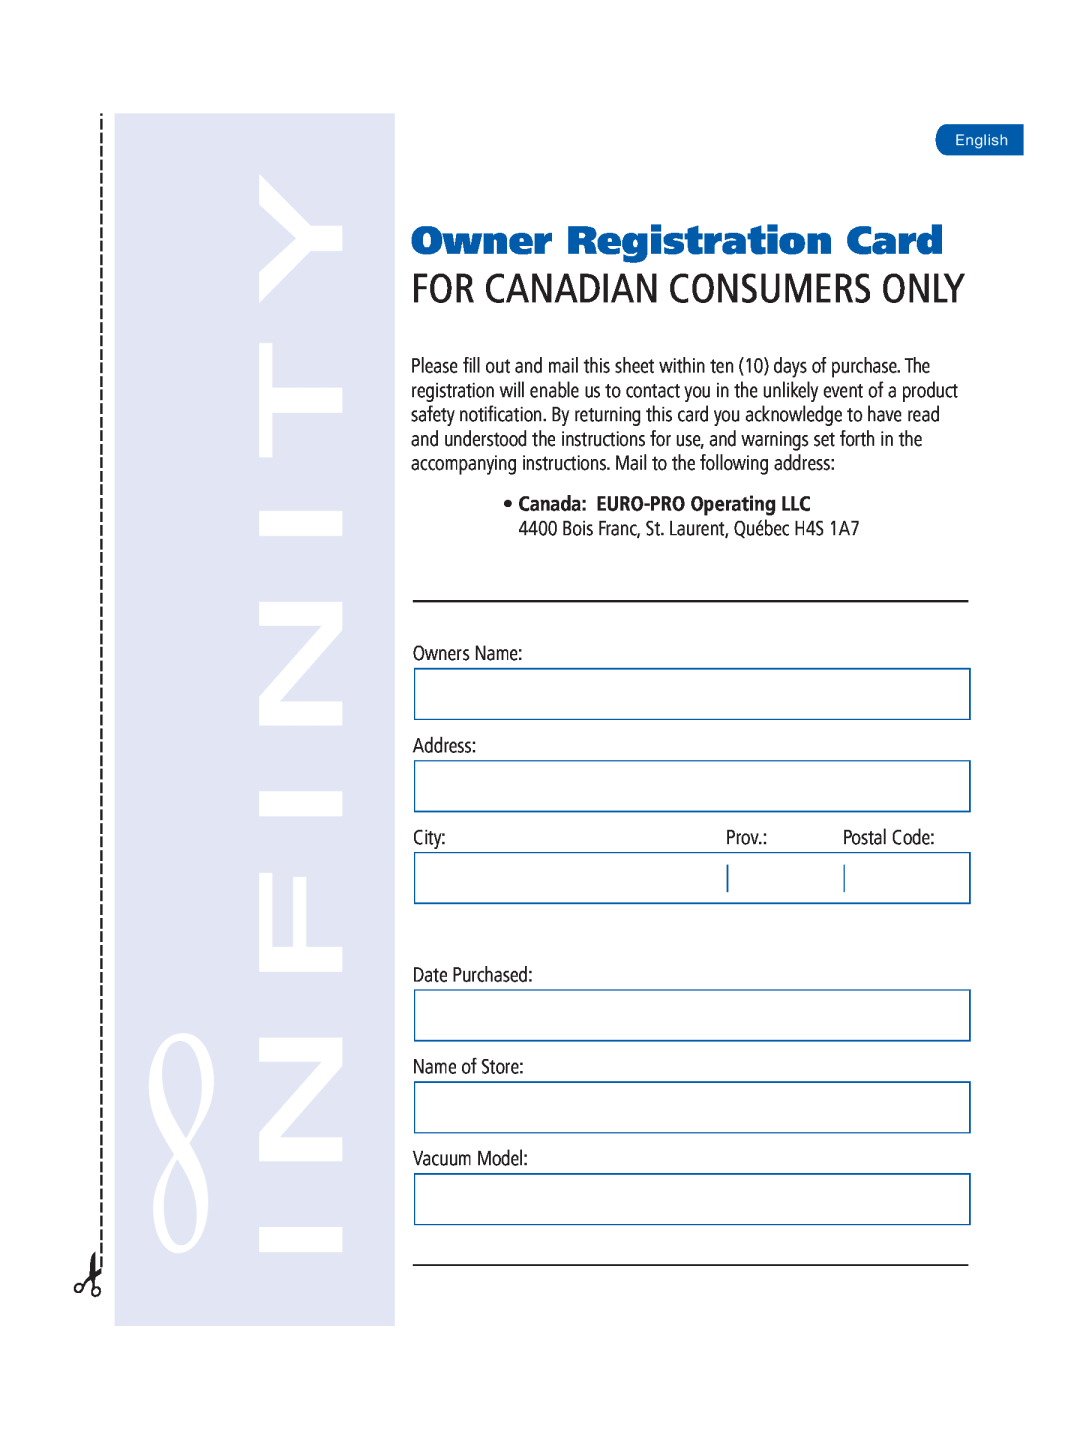 Infinity NV31K Owner Registration Card, For Canadian Consumers Only, Bois Franc, St. Laurent, Québec H4S 1A7, City, Prov 